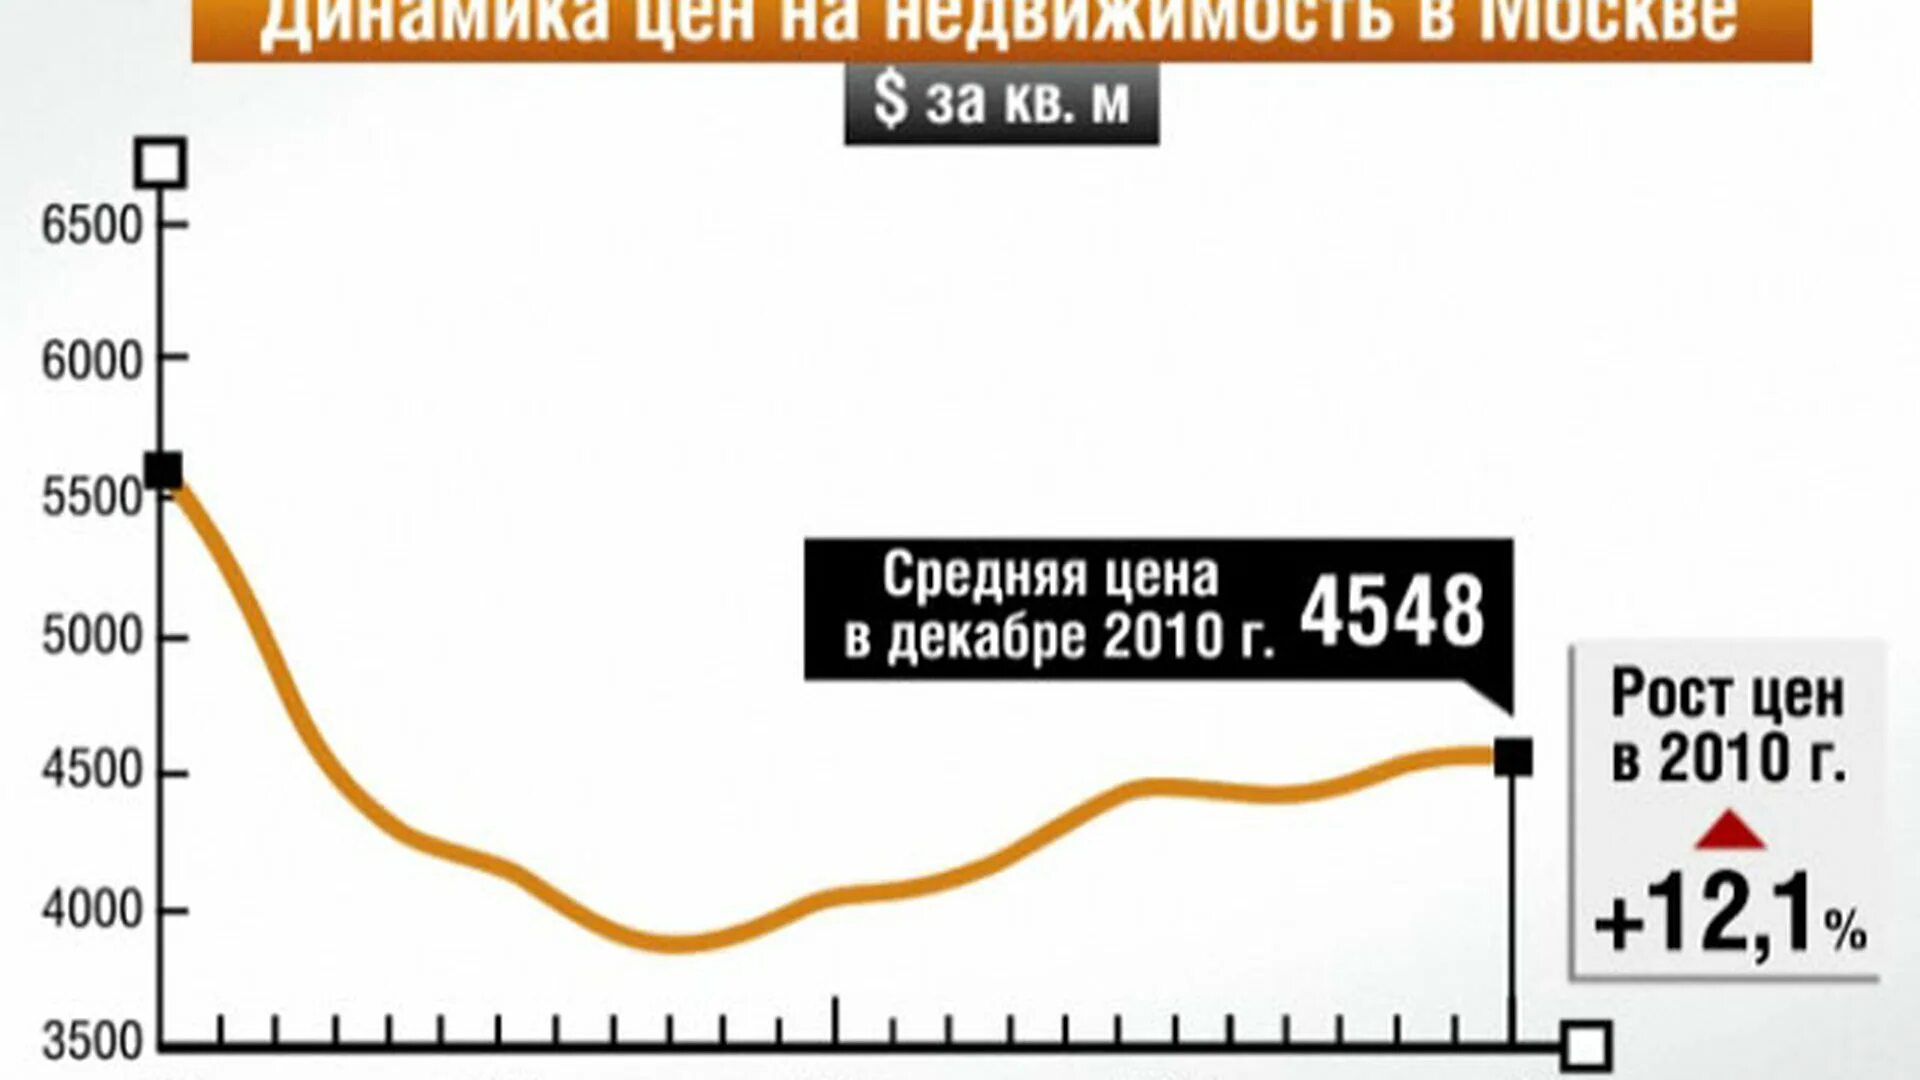 Динамика стоимости недвижимости. Динамика цен на недвижимость в Москве за 20 лет. График стоимости недвижимости в Москве. Динамика роста цен на недвижимость.